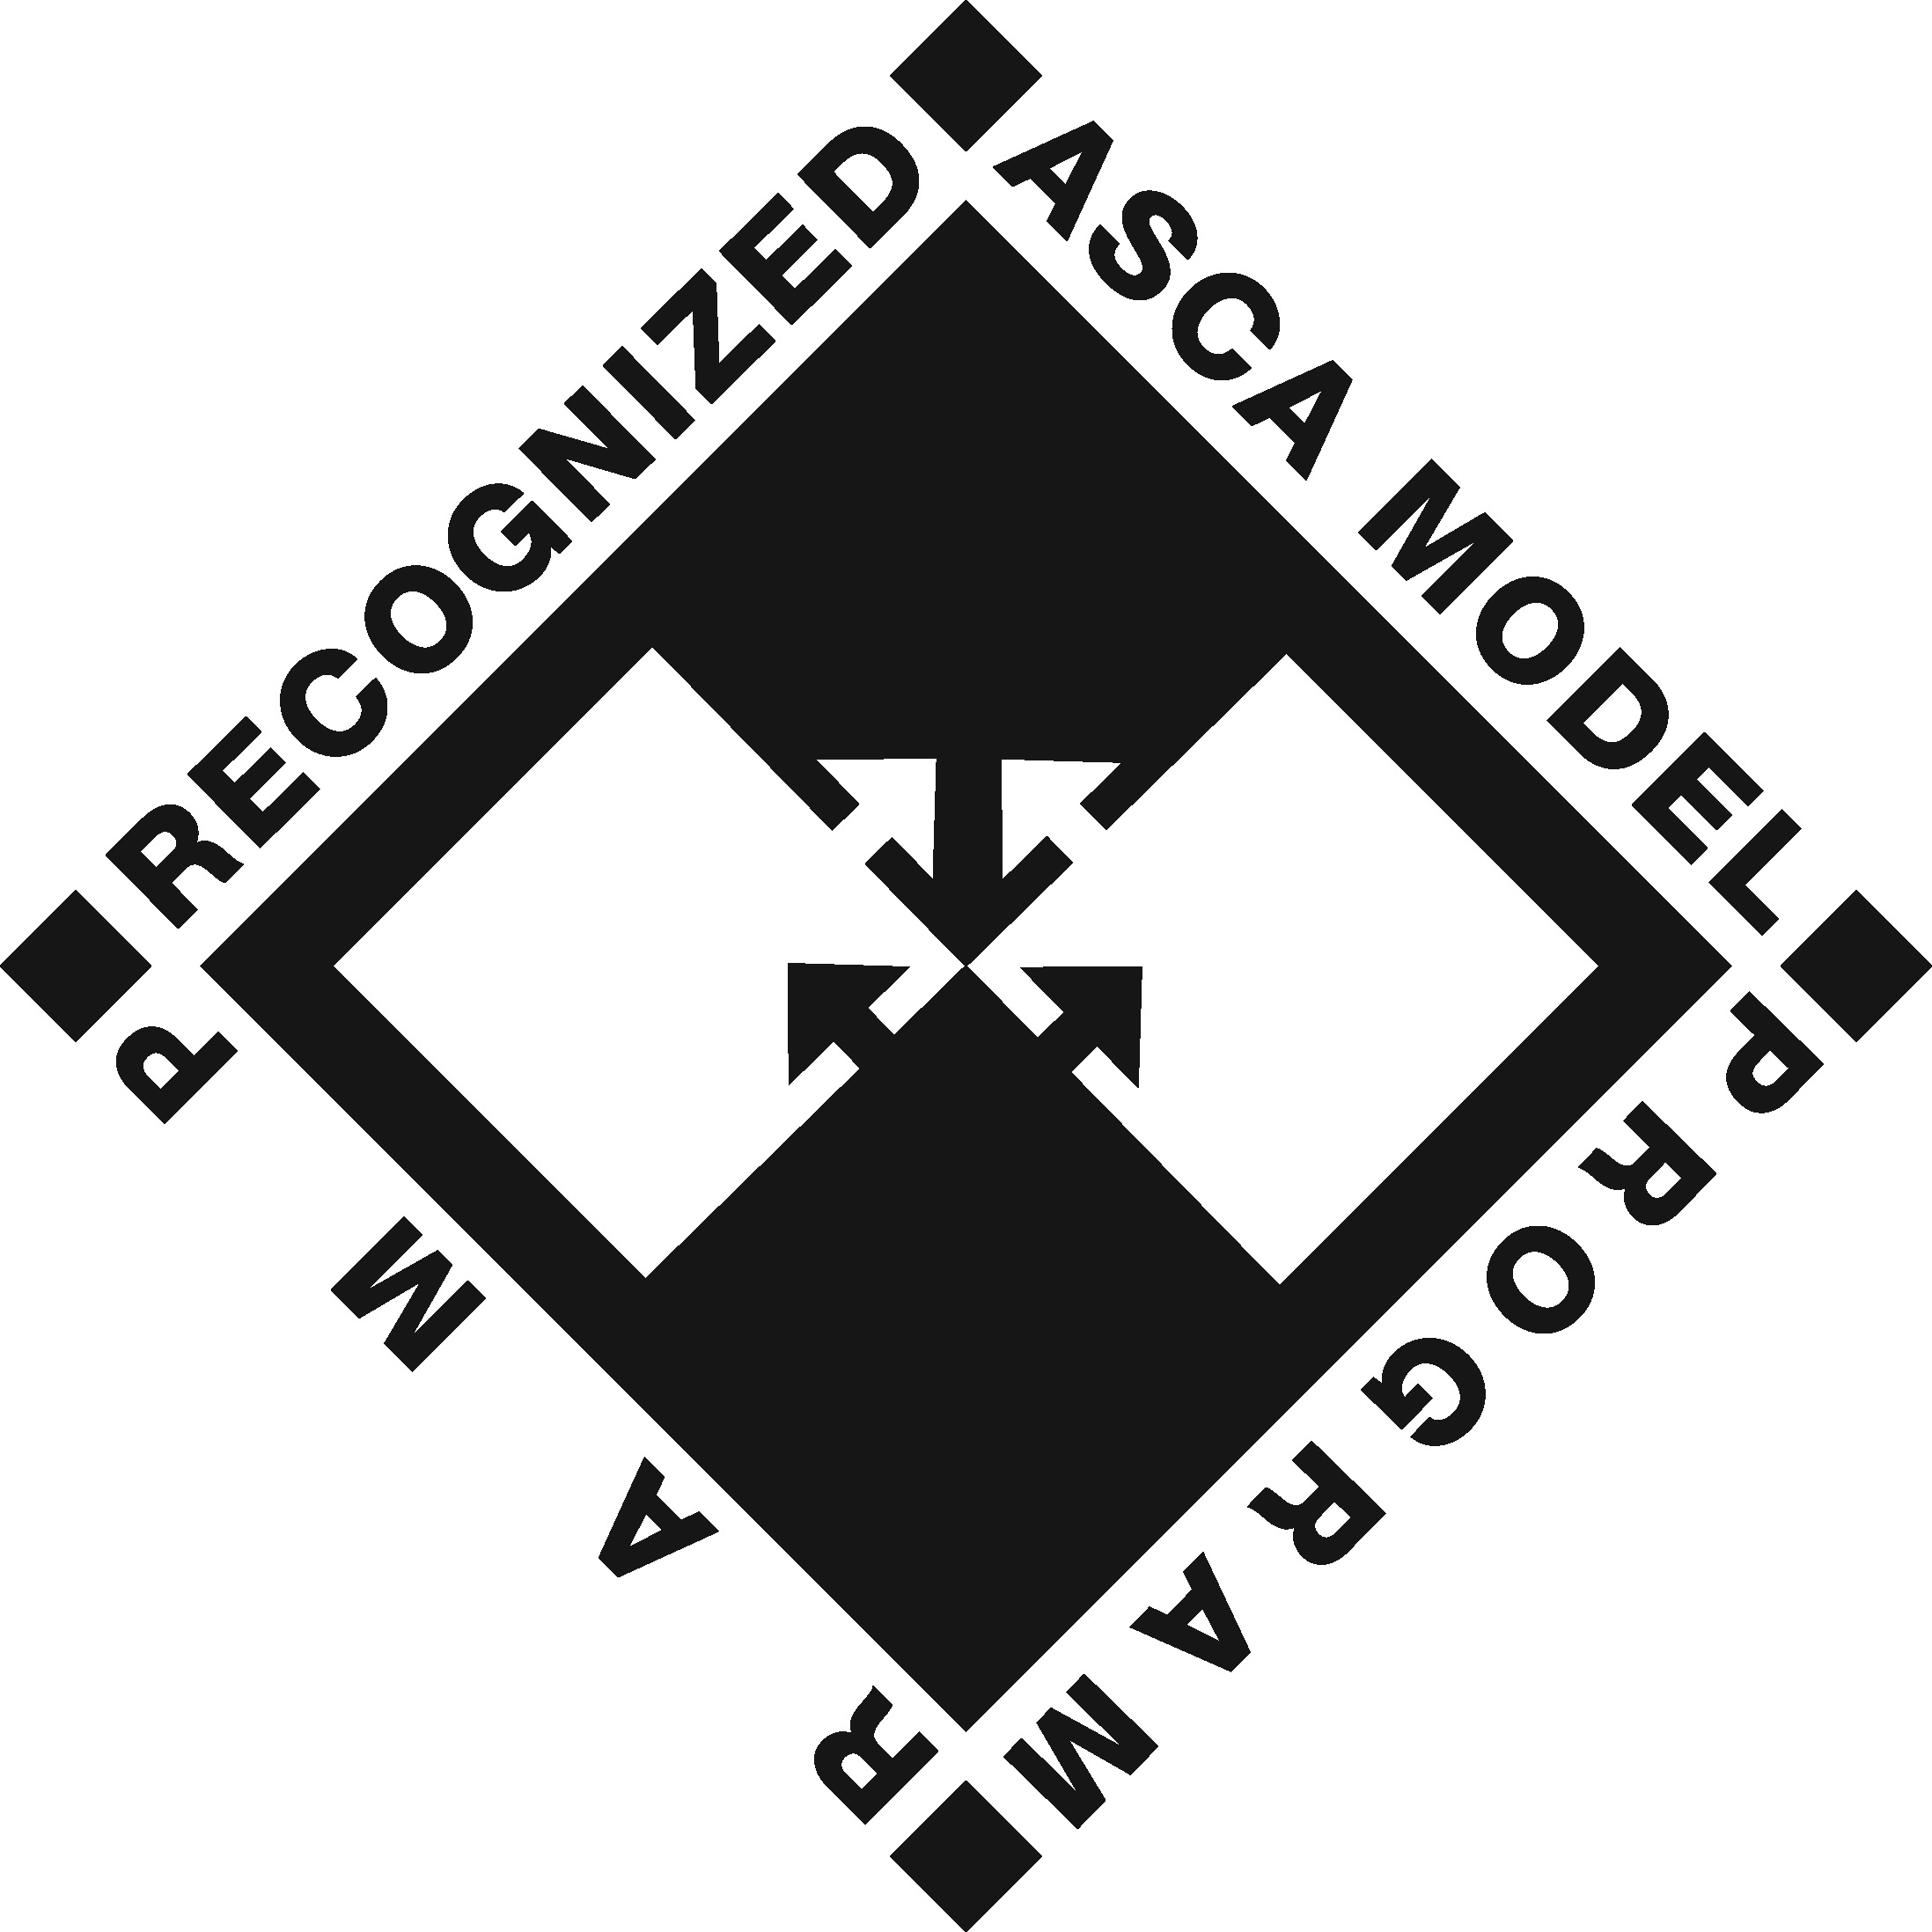 ASCA RAMP Certification logo